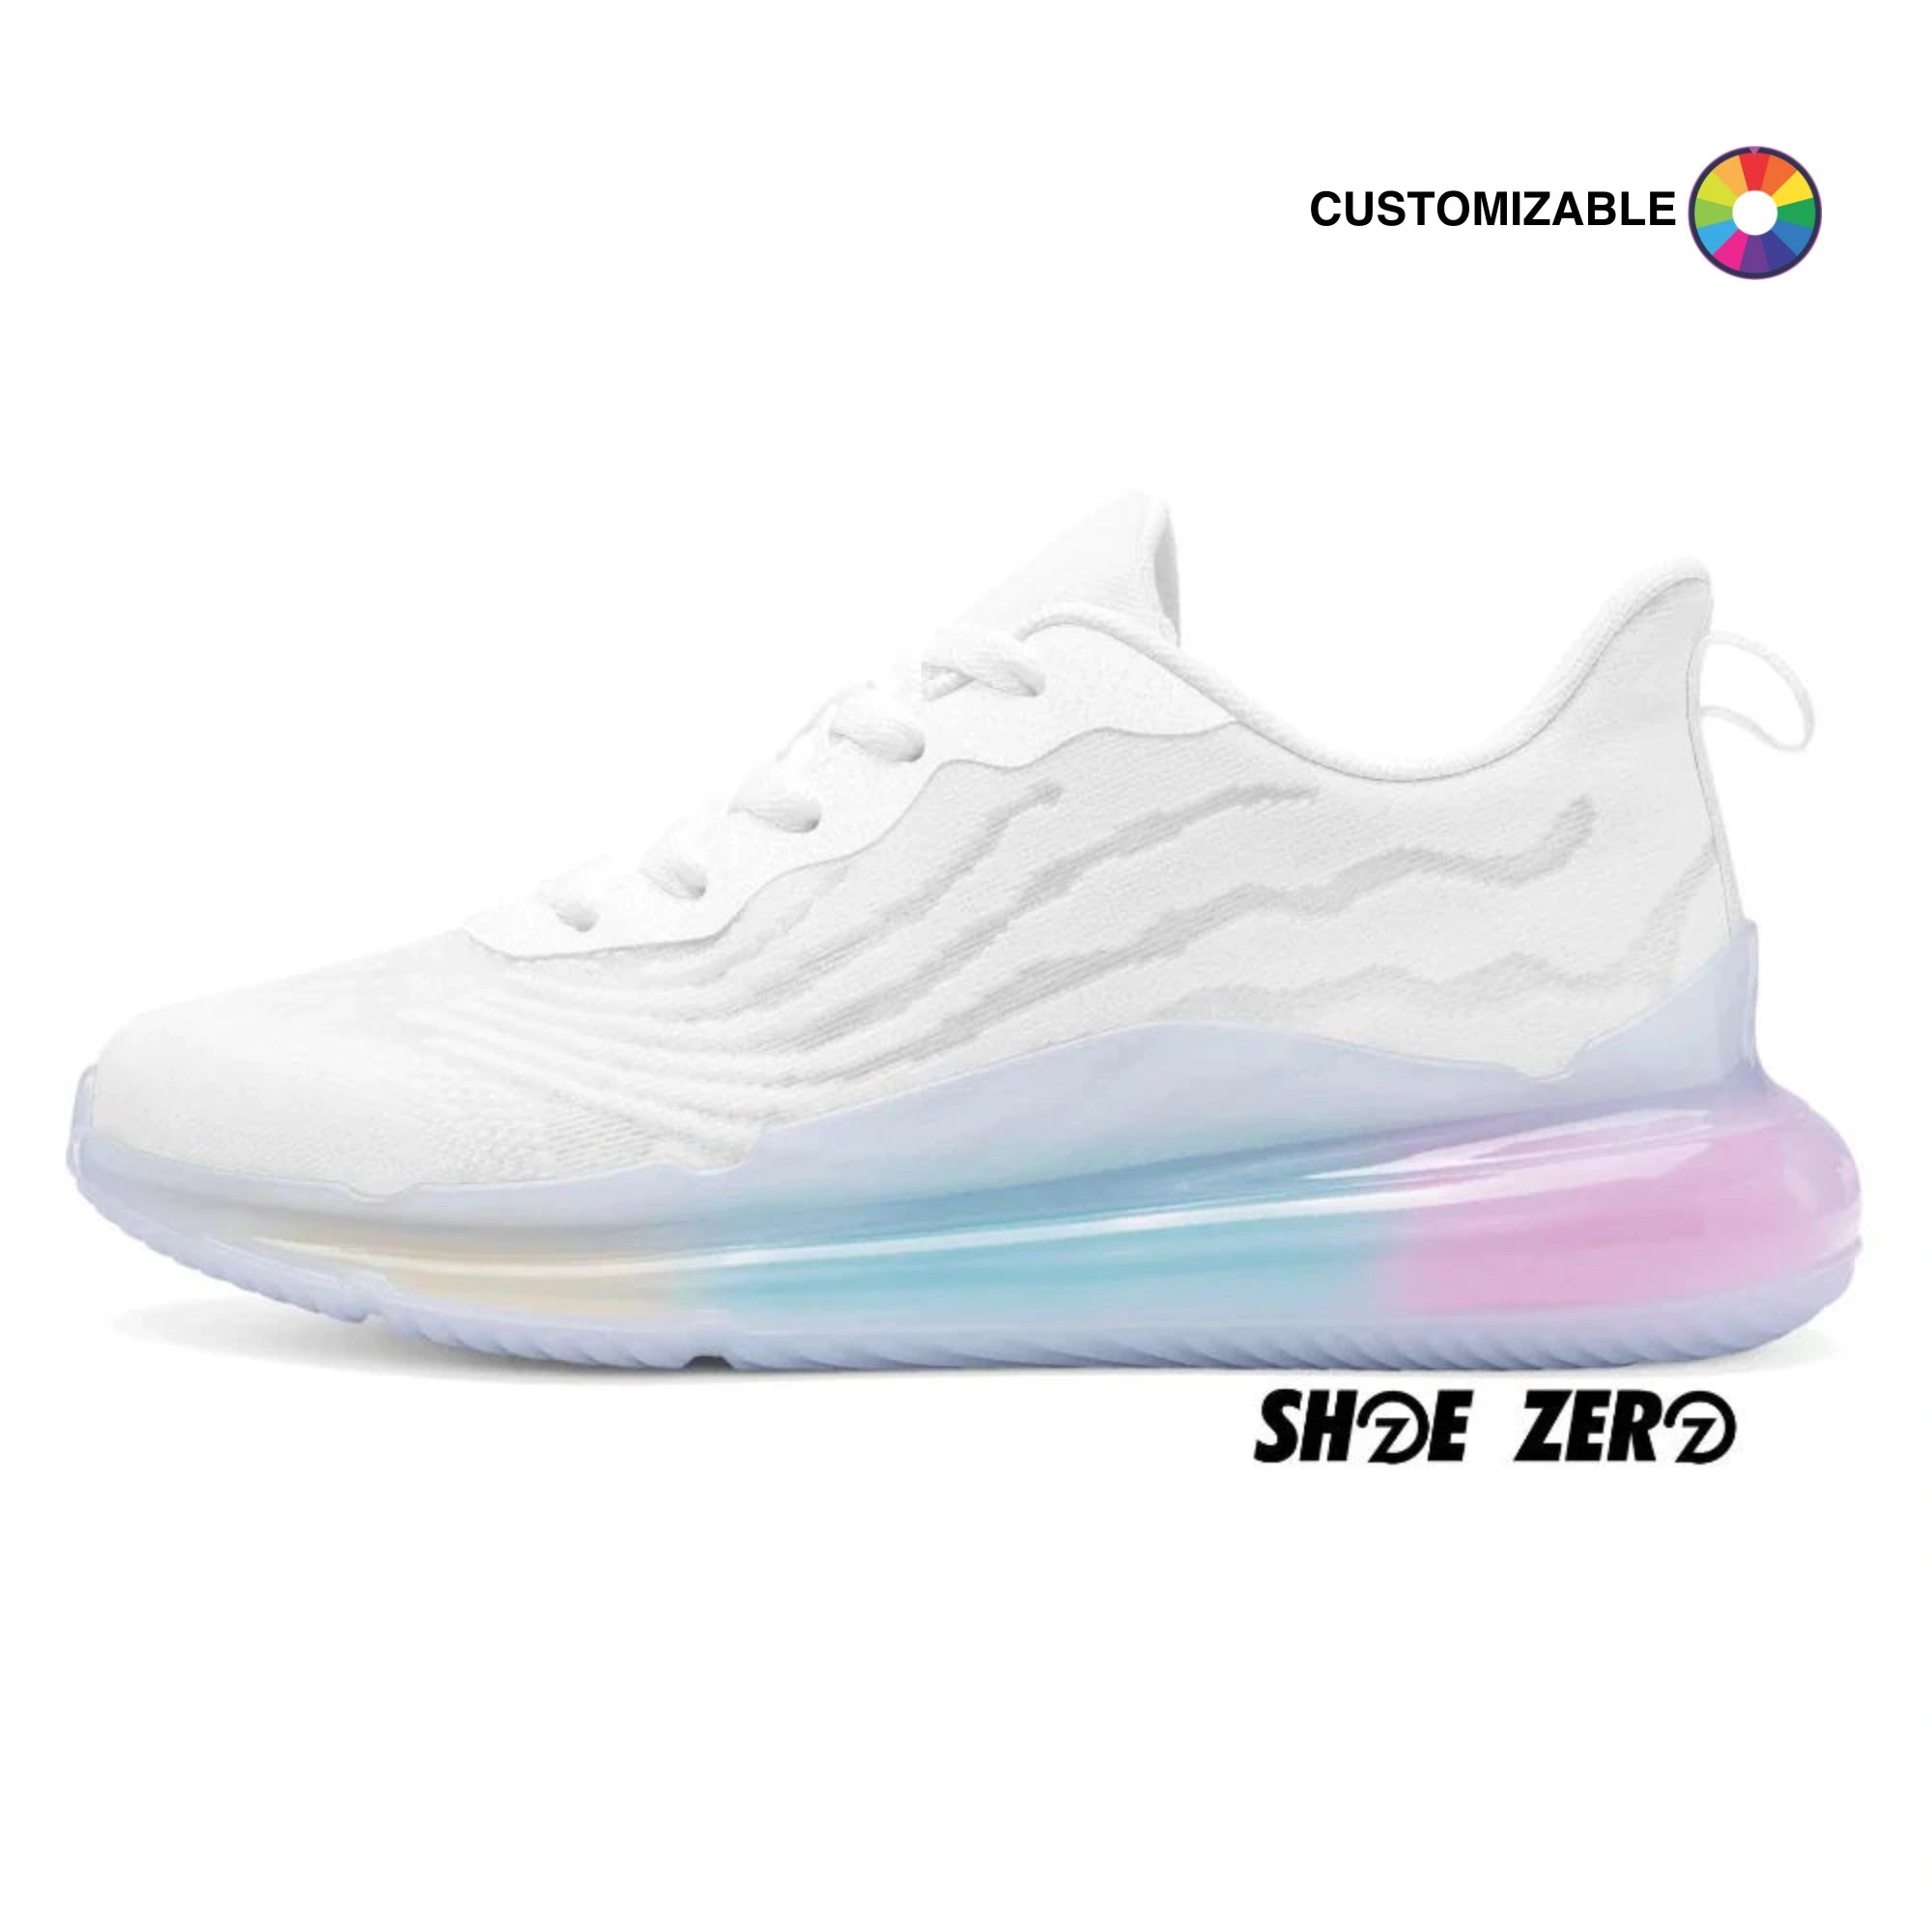 Customizable Rainbow Atmospheric Cushion Running Shoes | Design your own | Shoe Zero